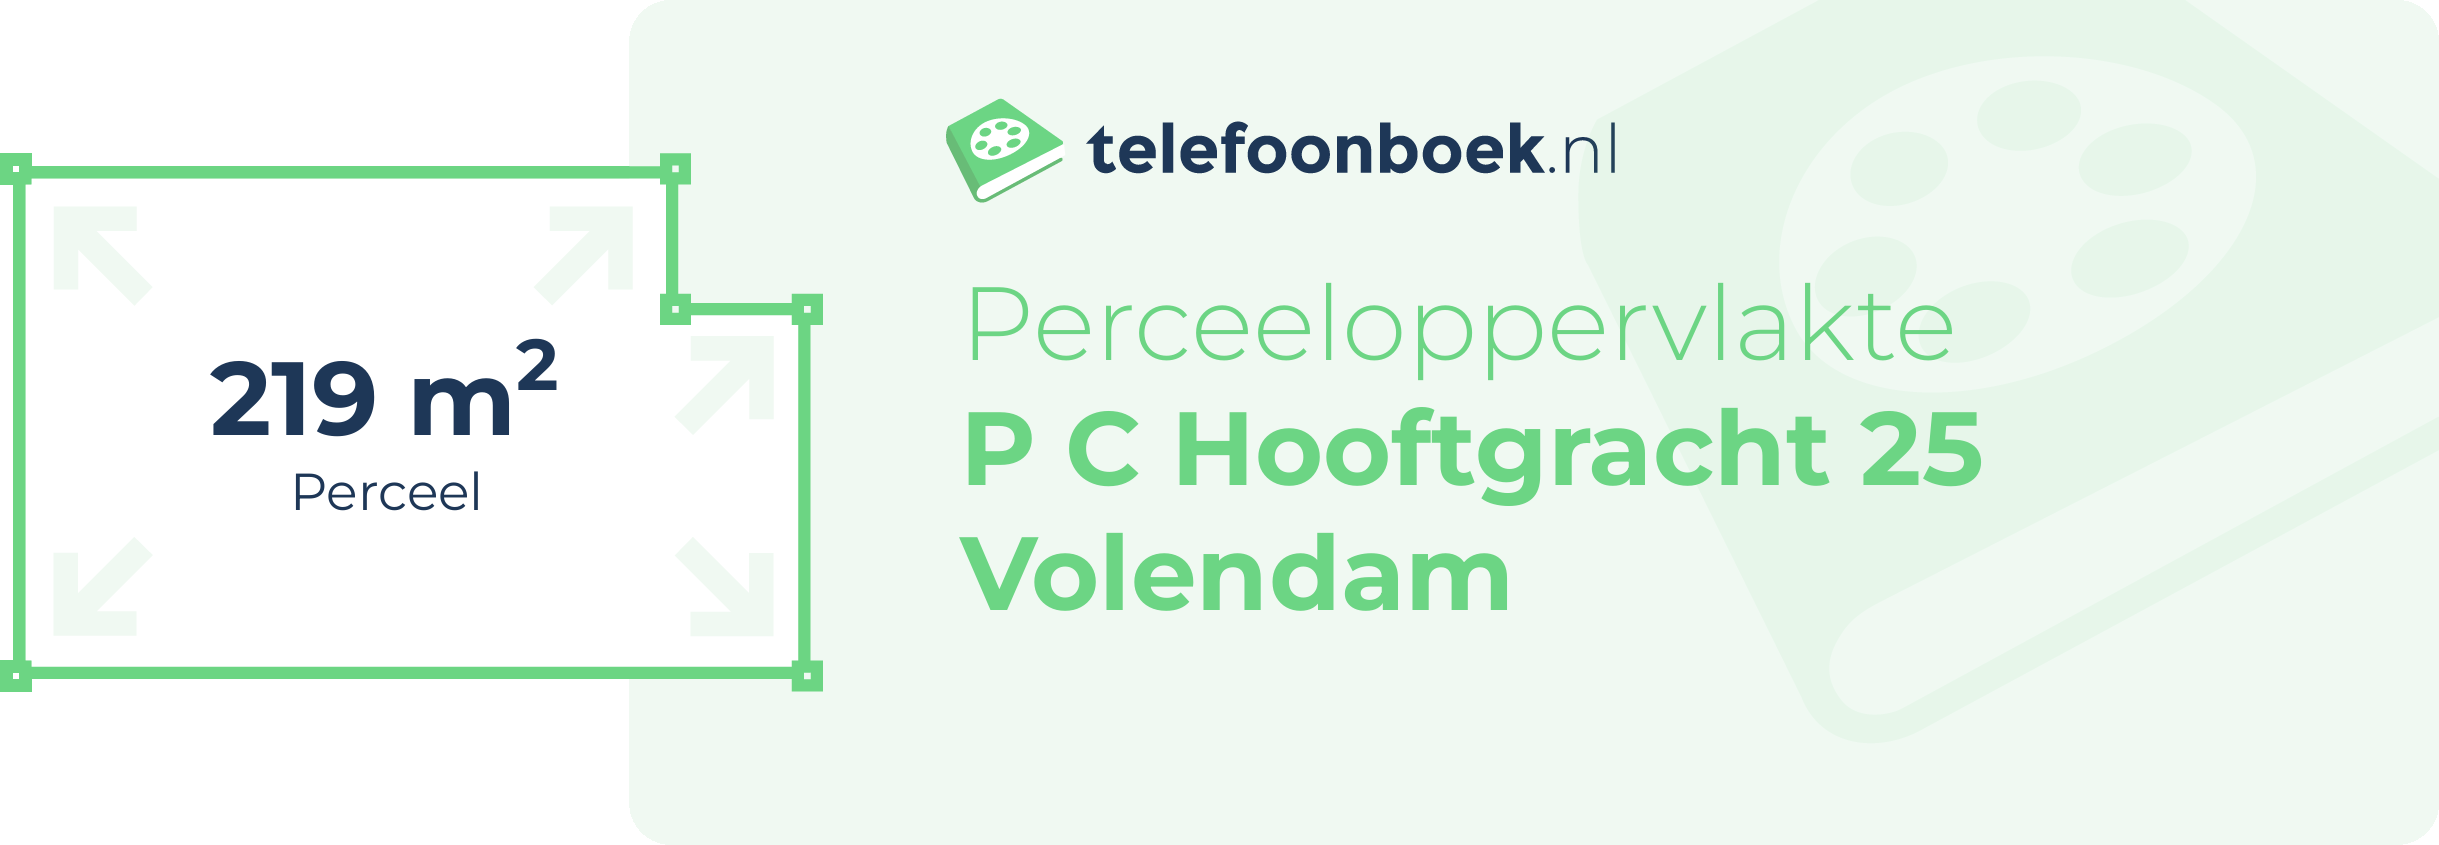 Perceeloppervlakte P C Hooftgracht 25 Volendam